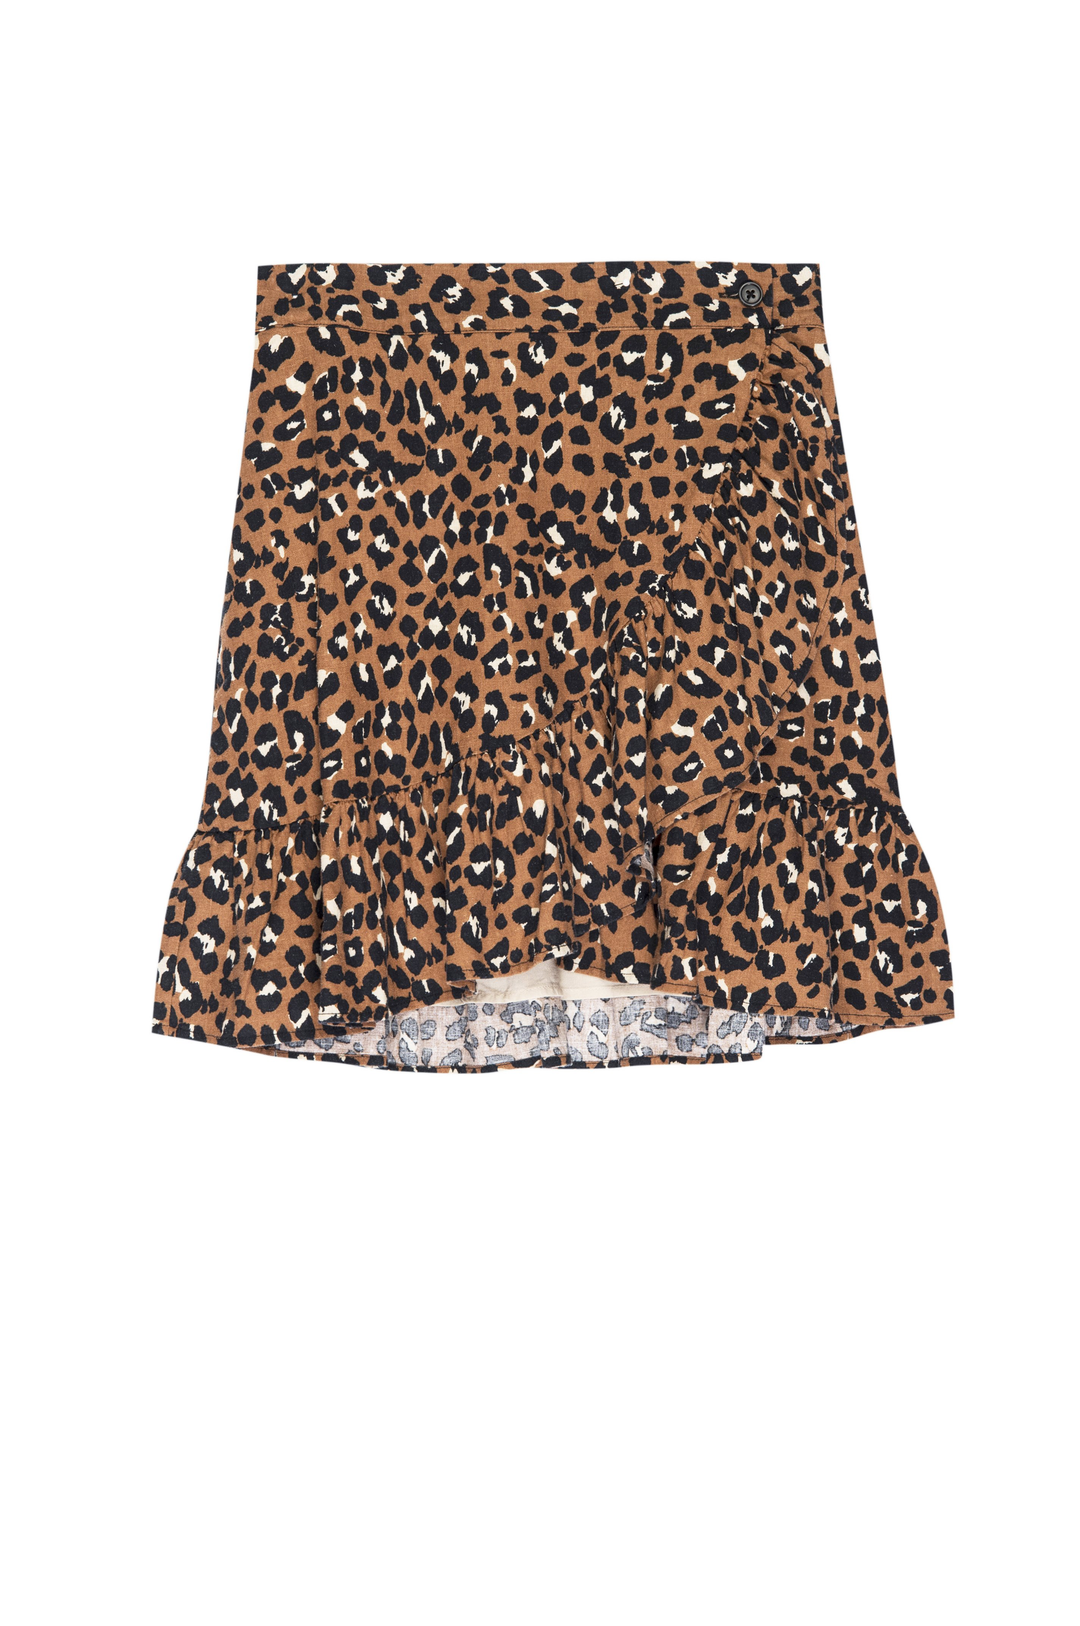 Maci Skirt - Kingfisher Road - Online Boutique